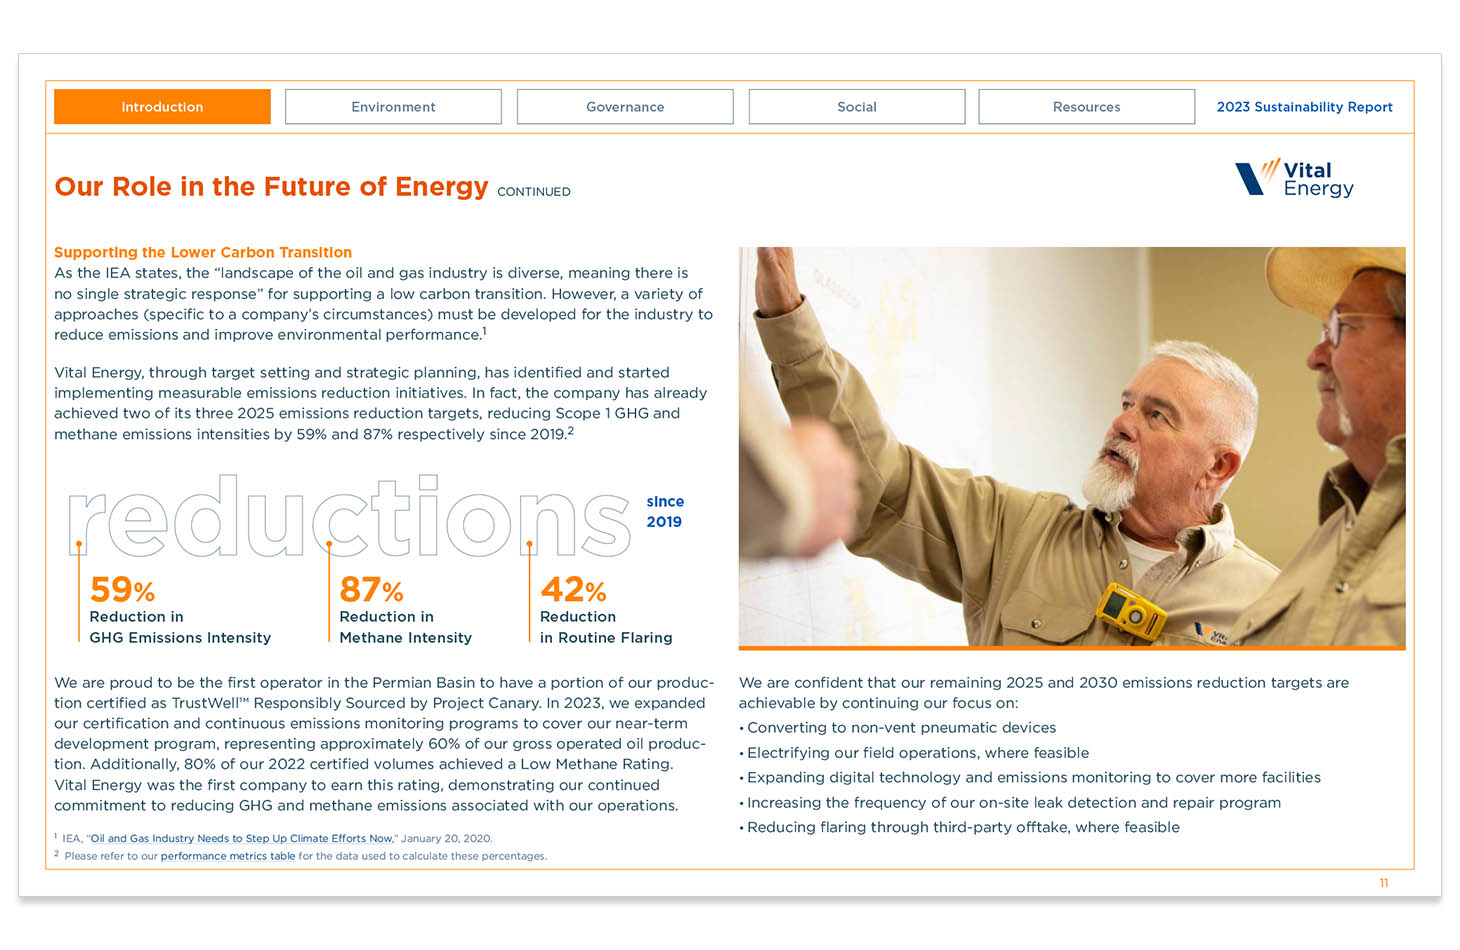 Vital Energy ESG Report Image 2